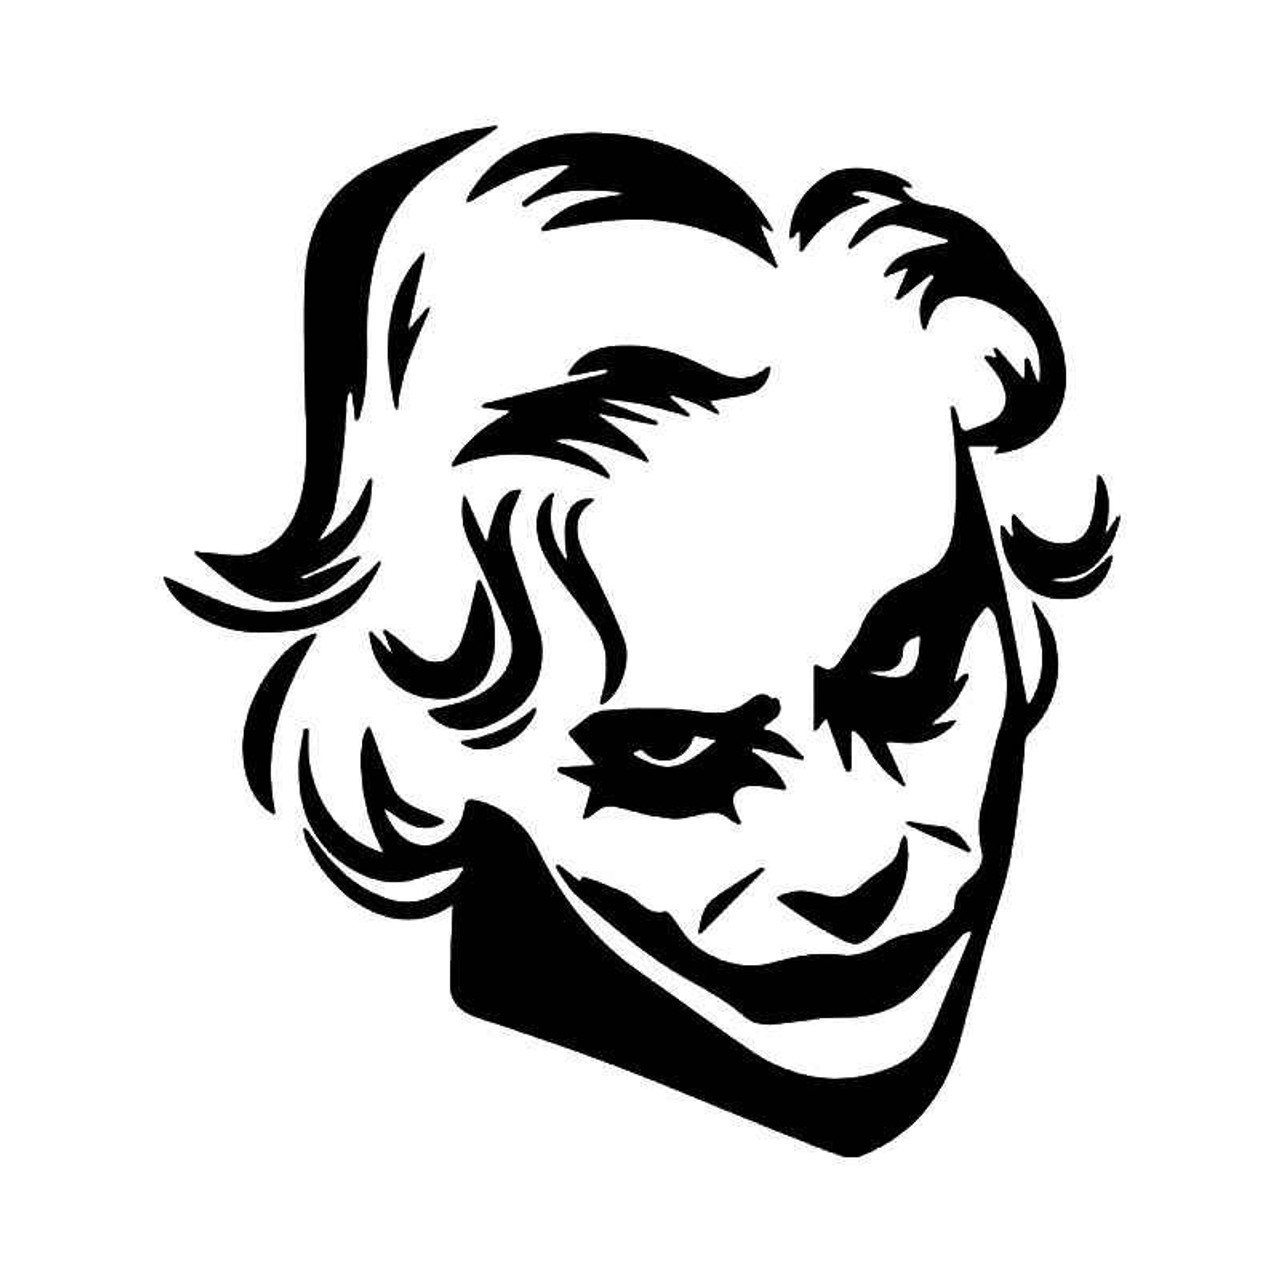 Download The Joker Face Mask 2 Vinyl Sticker